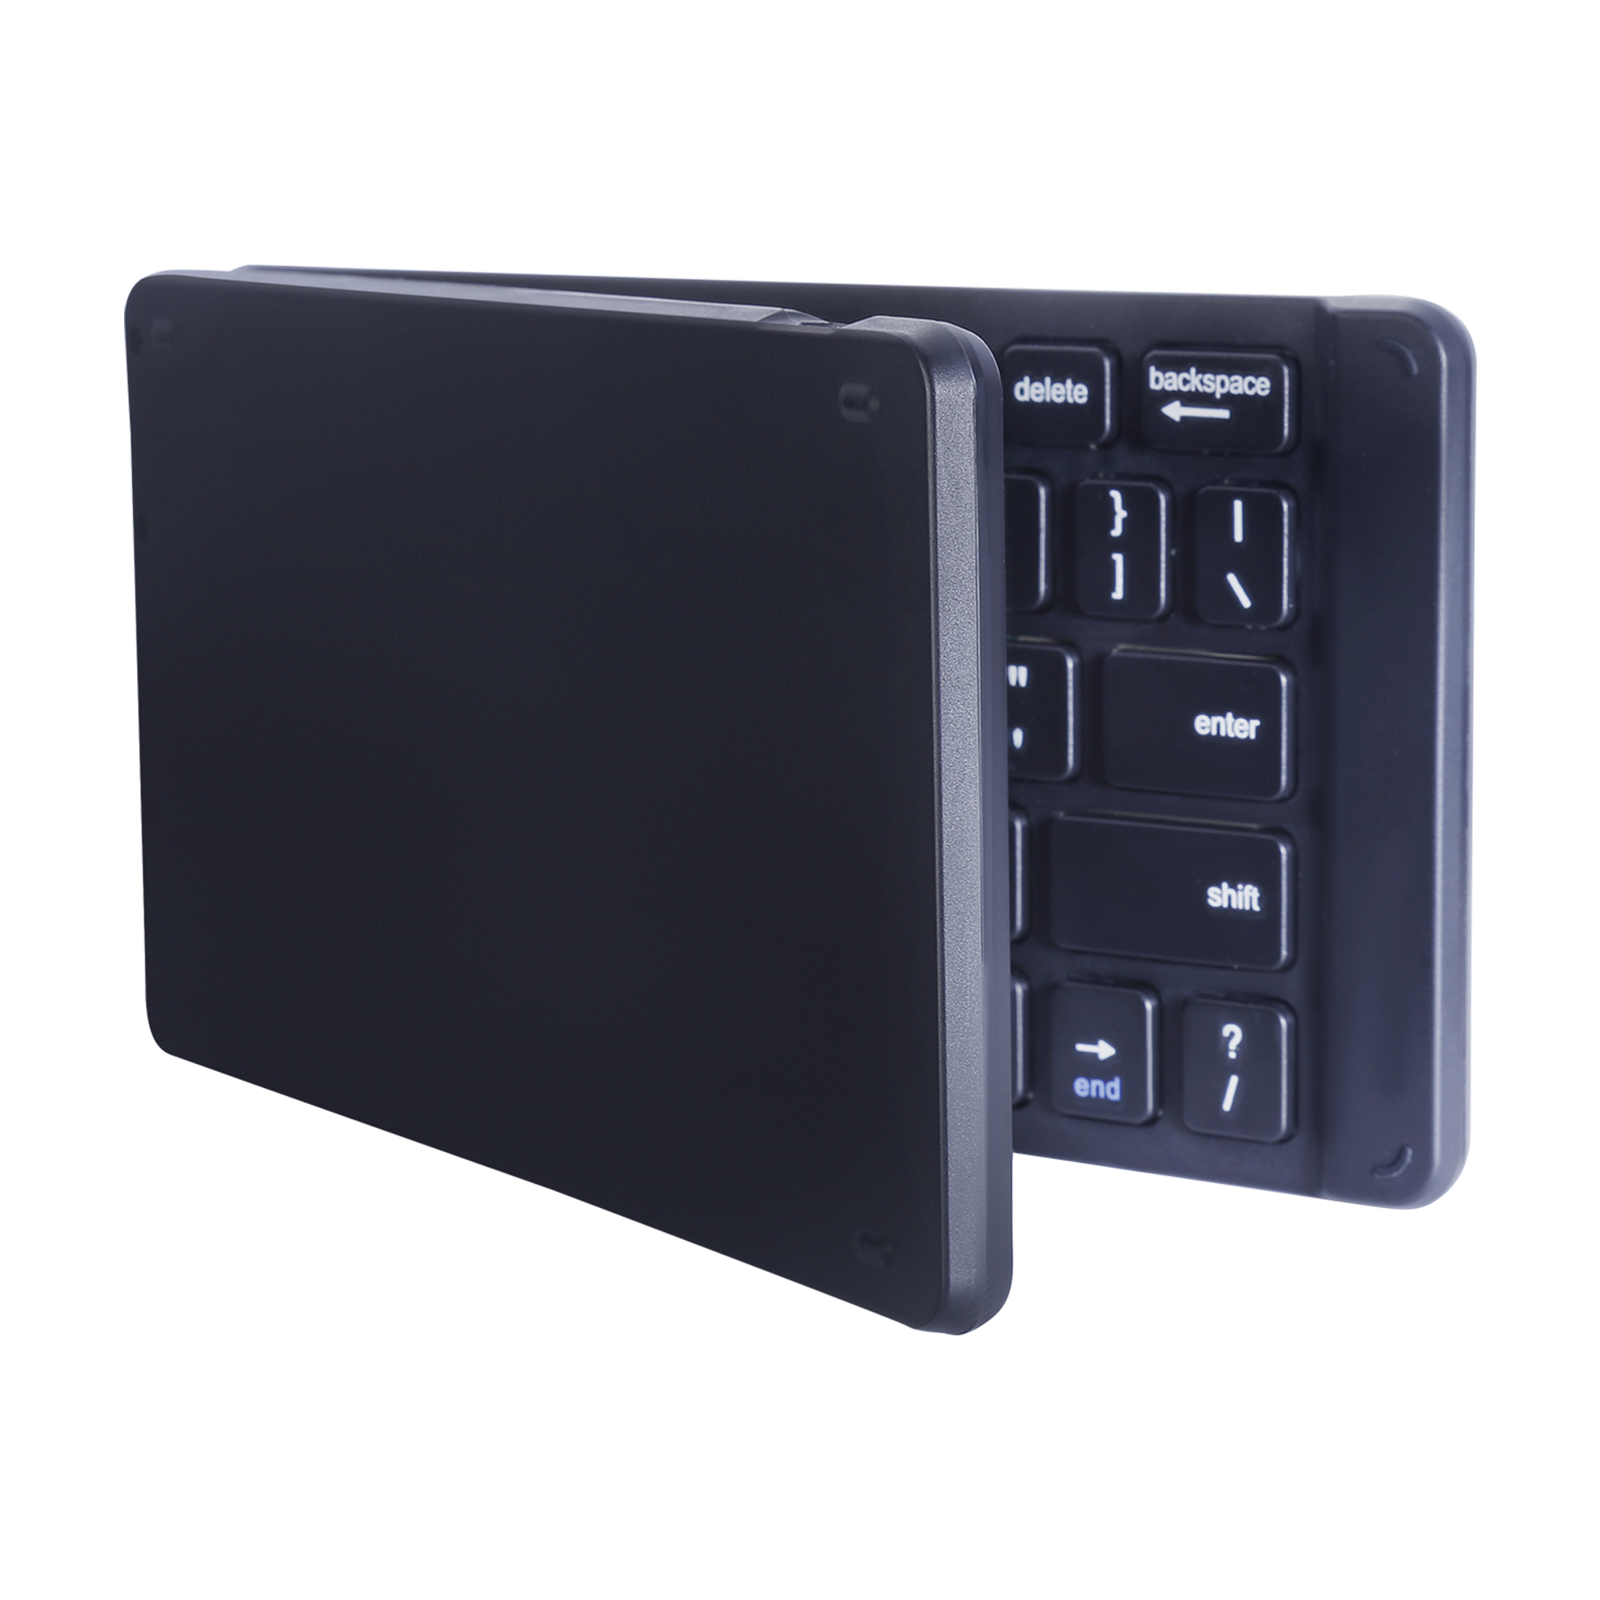 81Key 3-Folding Wireless Bluetooth Keyboard Multi-System For Tablet Laptop  Phone